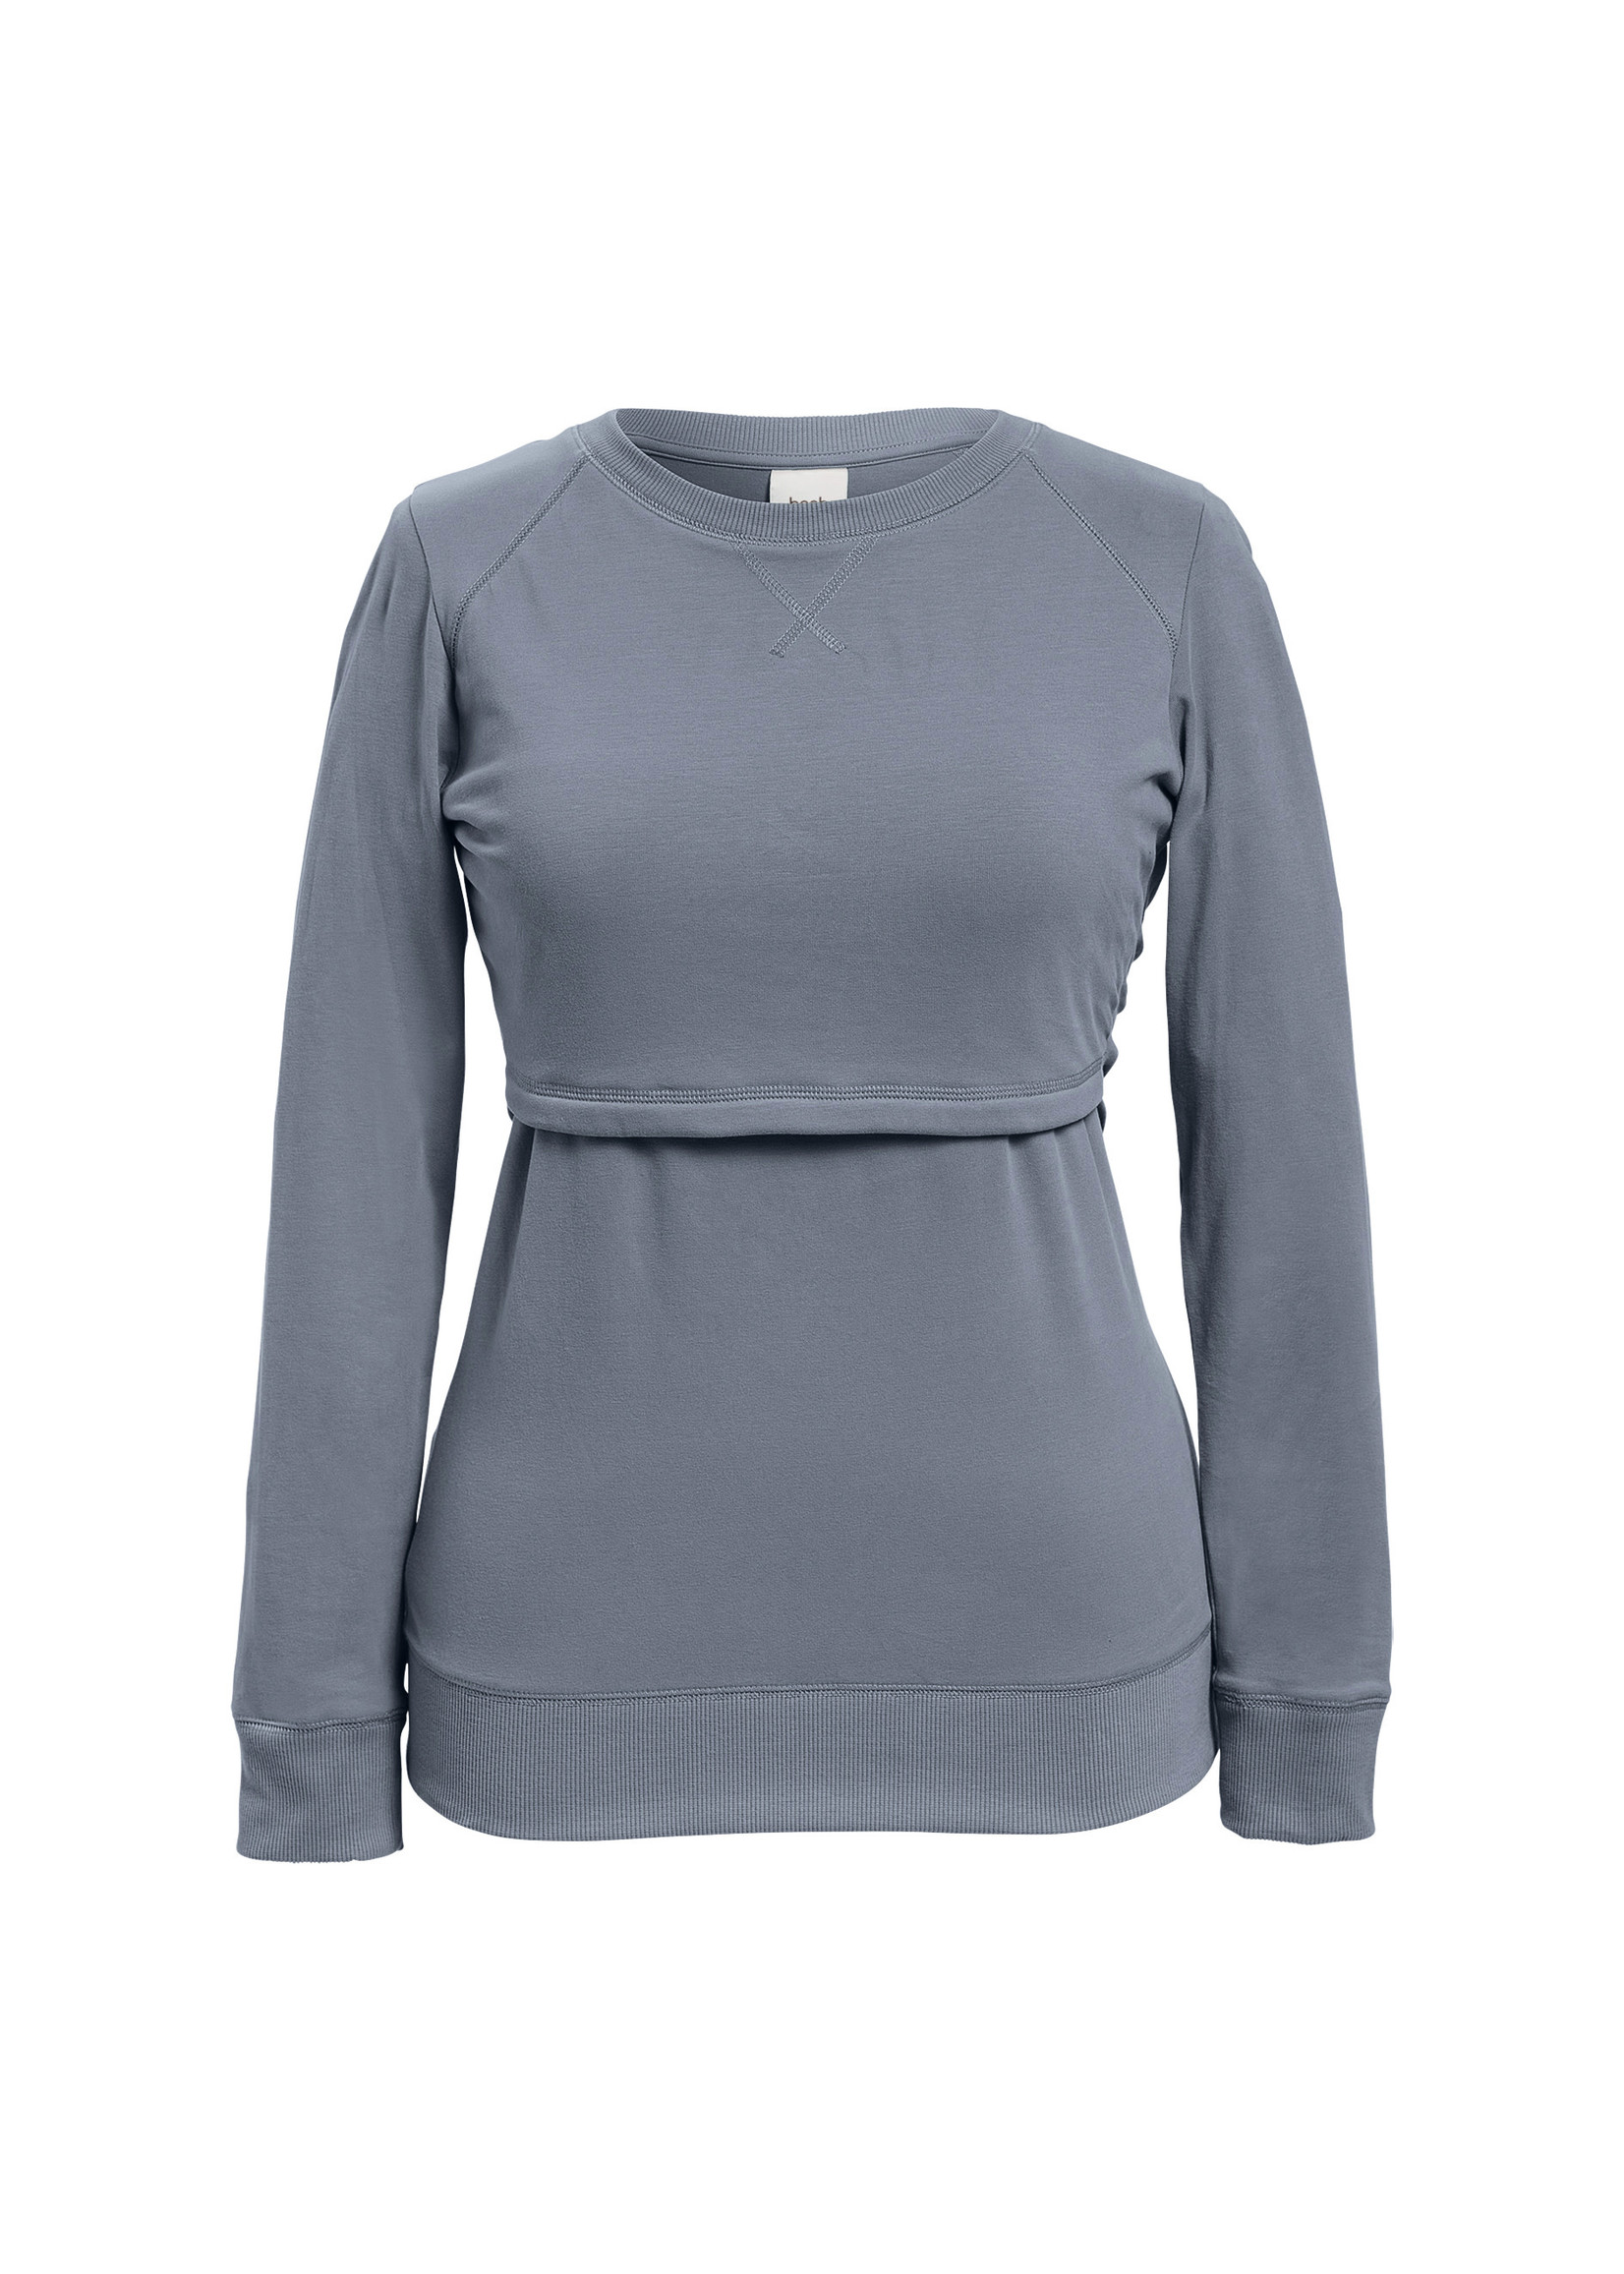 Knox Rose hoodie burnout sweatshirt NEW velour velvet feel small - $26 -  From Adriana